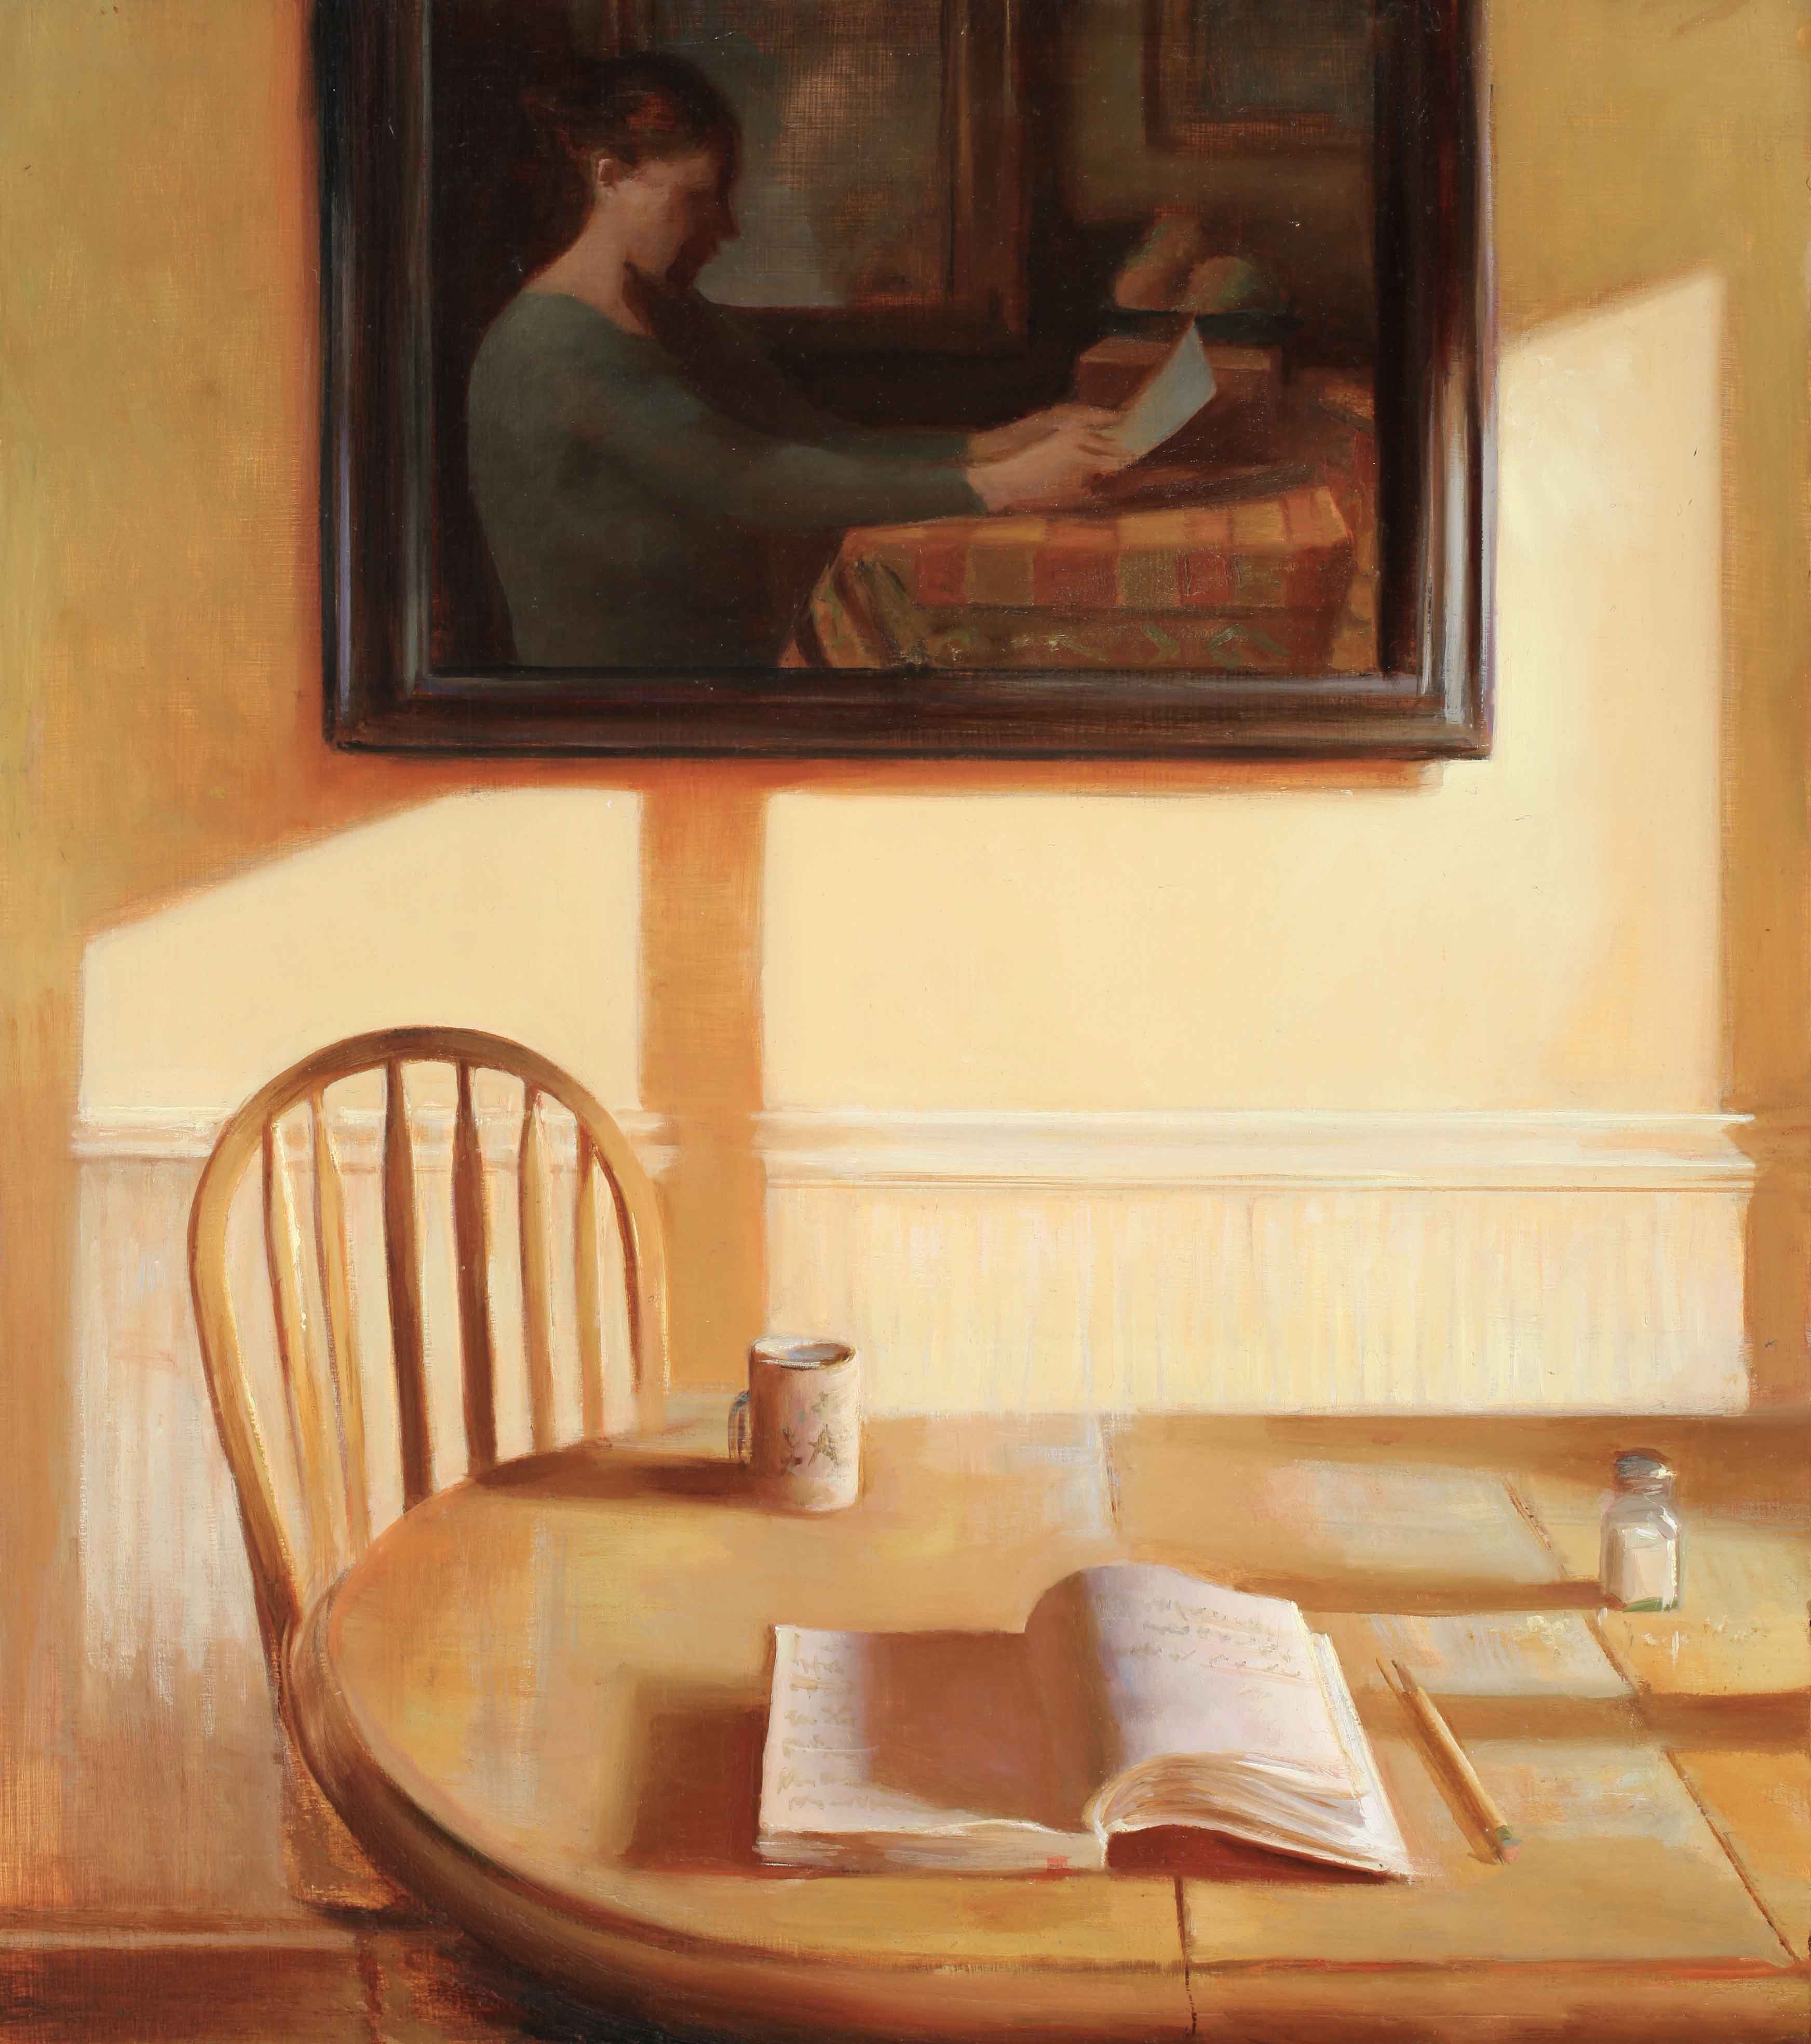 Juliette Aristides, “Kitchen Table,” 2018, oil on panel, 18 x 16 in.